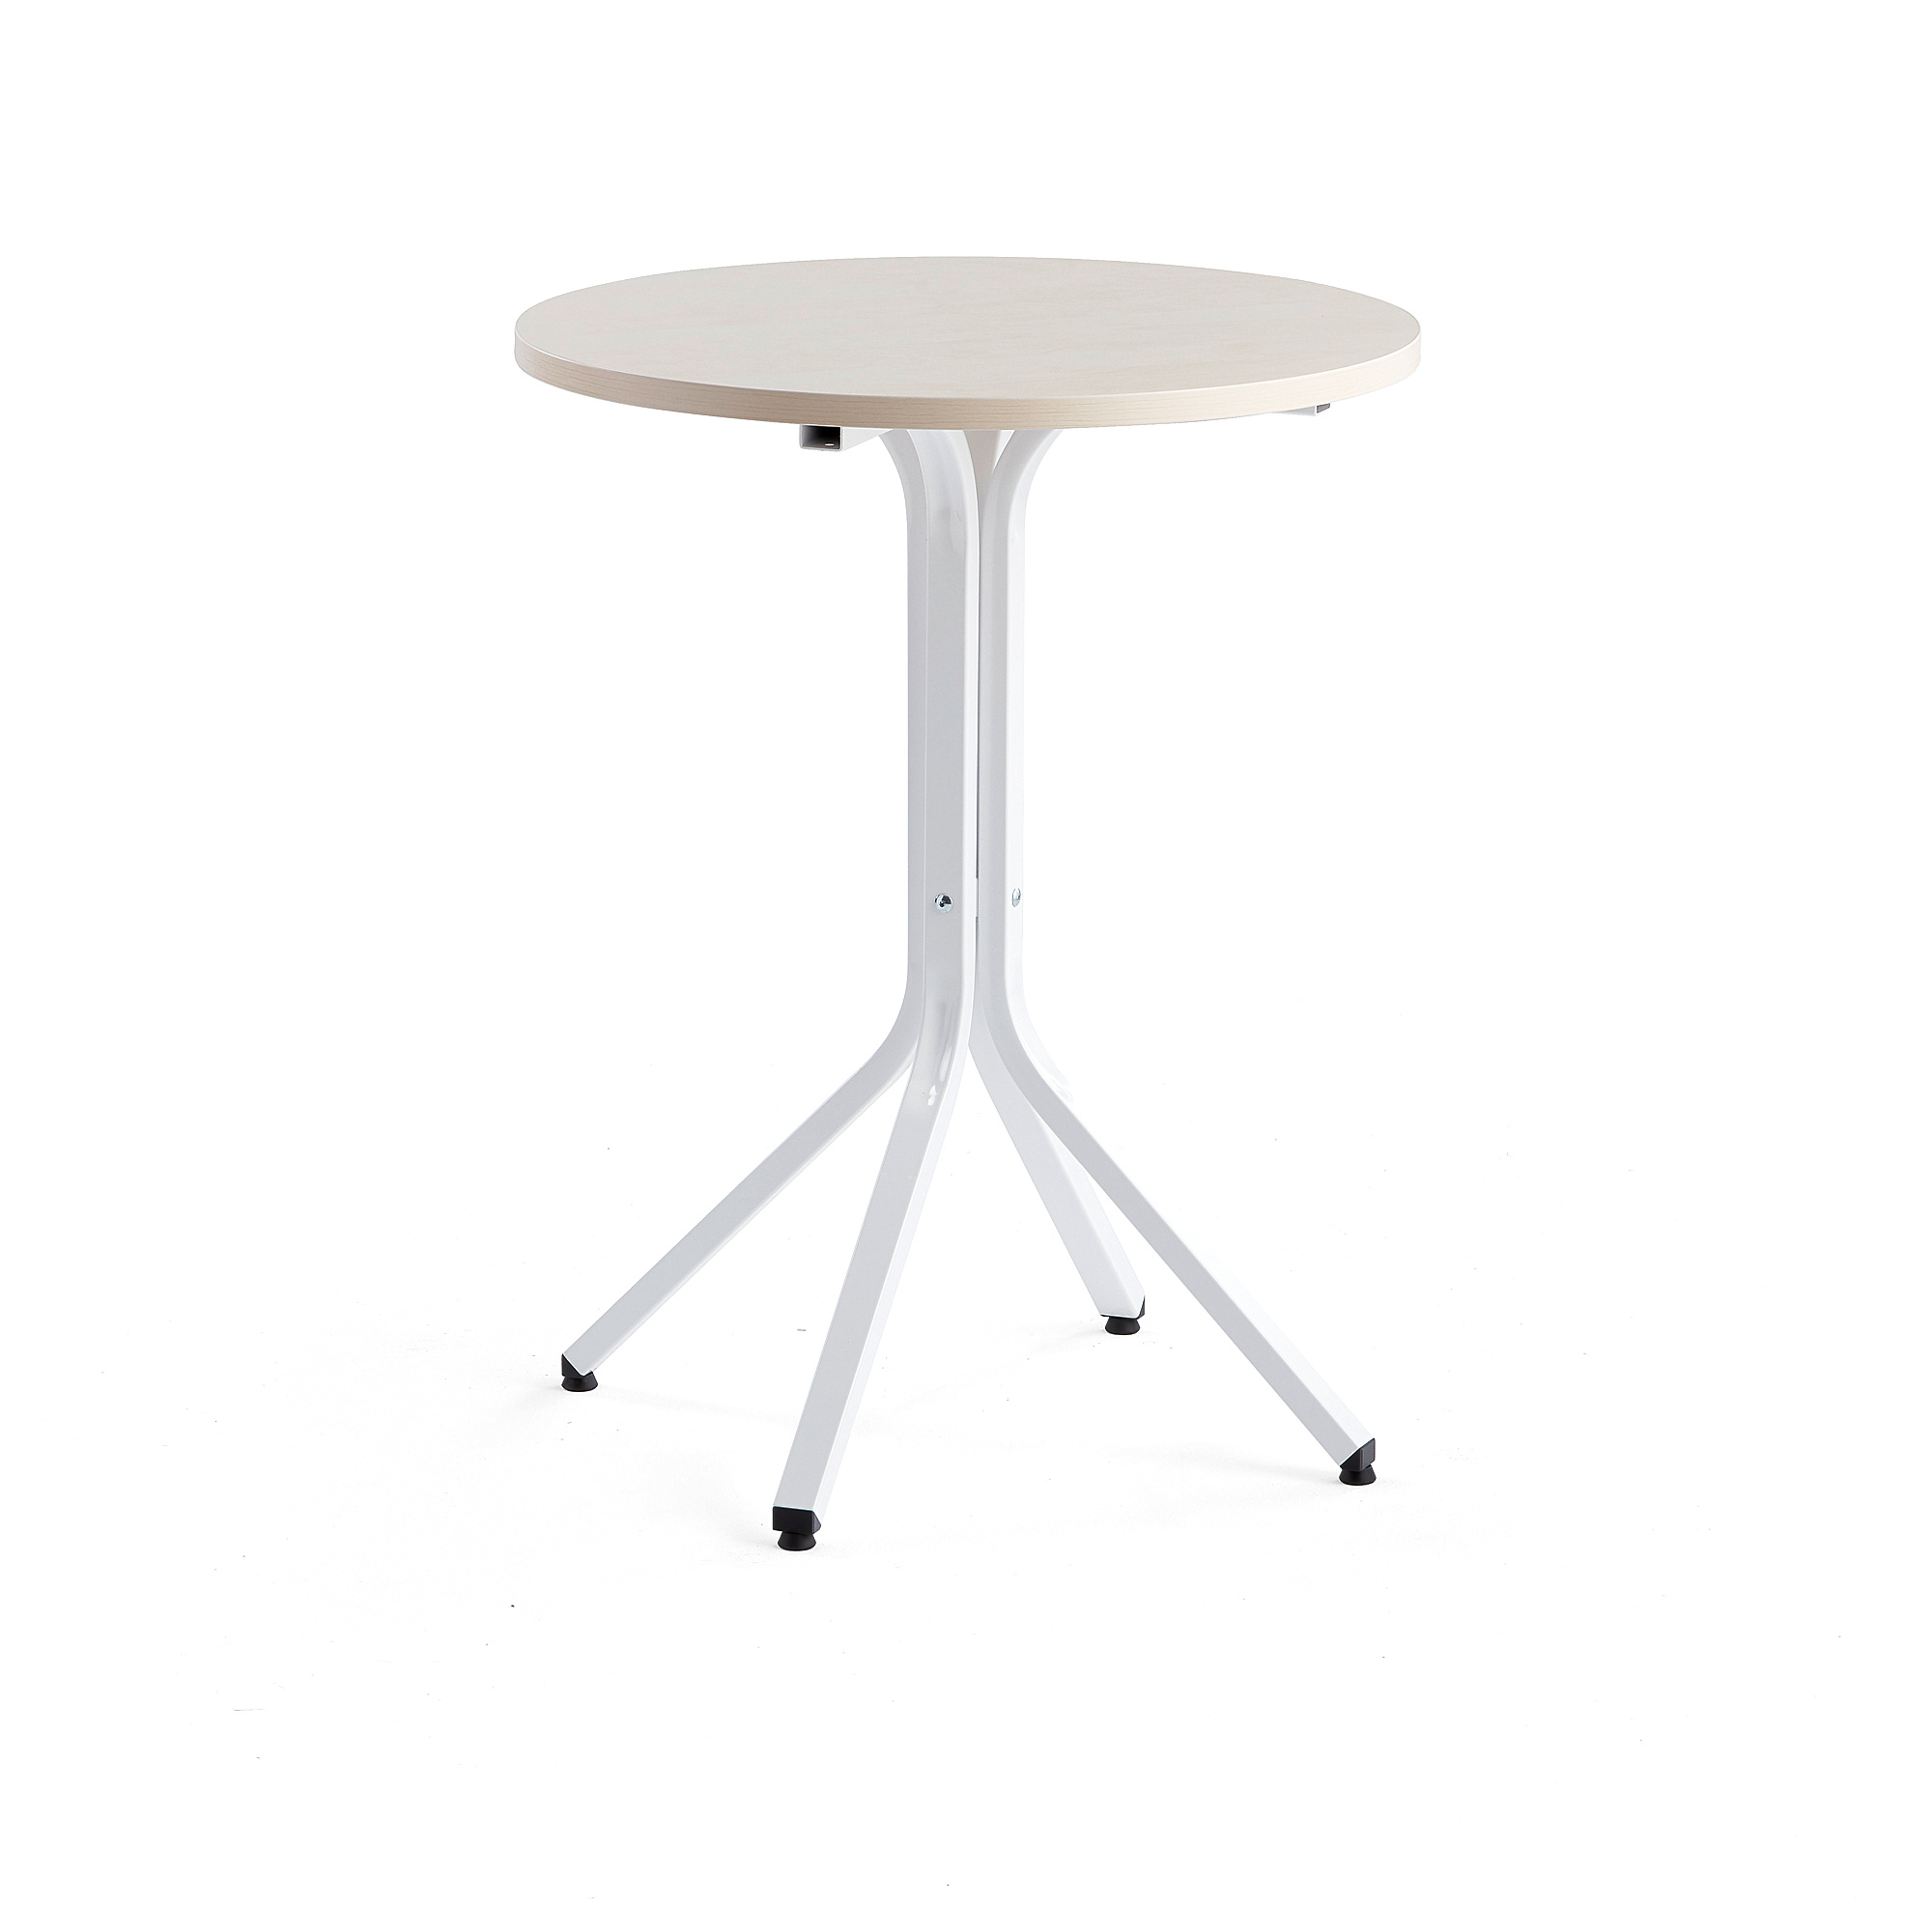 Stůl VARIOUS, Ø700 mm, výška 900 mm, bílá, bříza